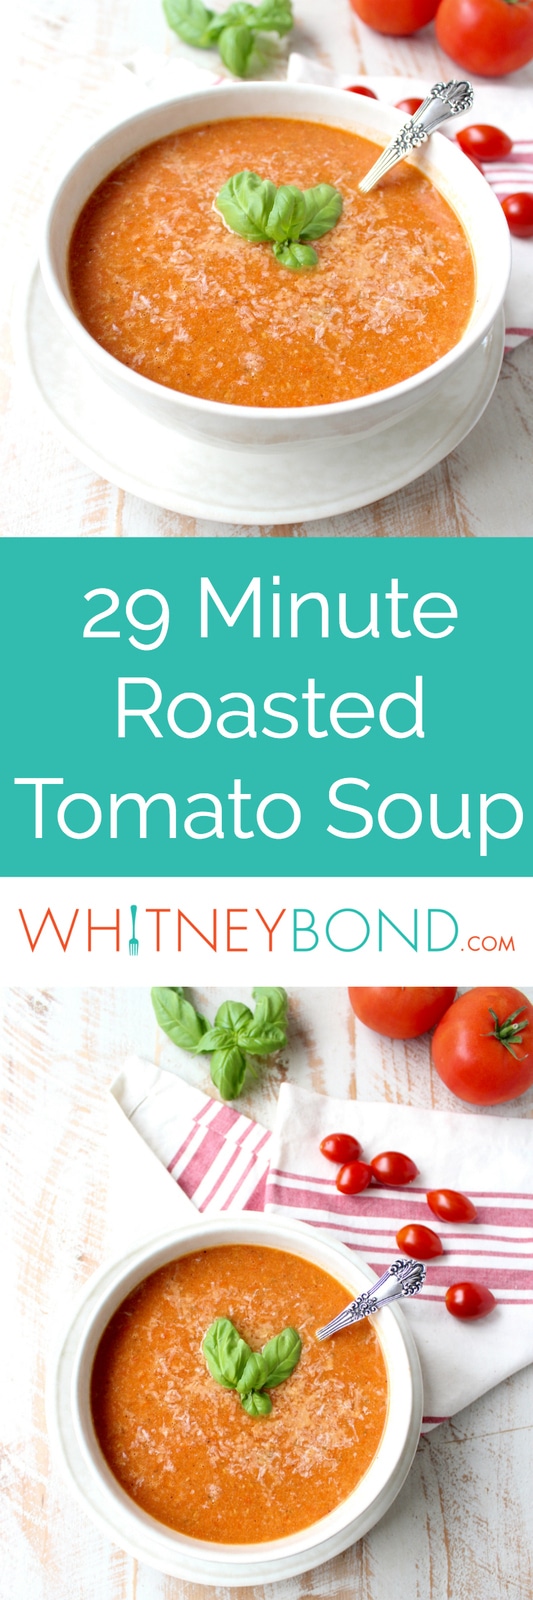 Easy Roasted Tomato Soup Recipe - WhitneyBond.com